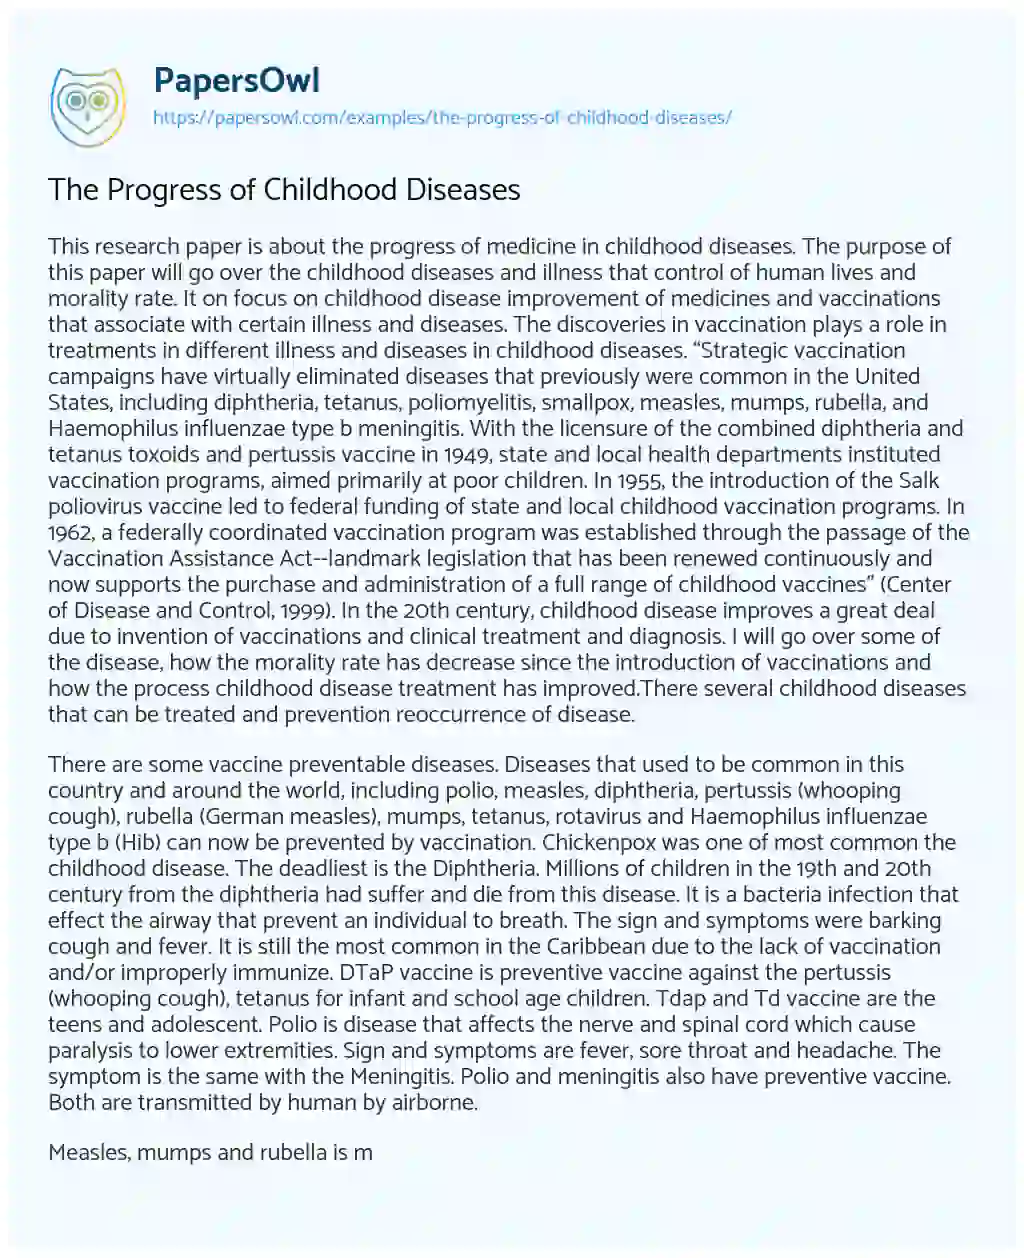 Essay on The Progress of Childhood Diseases